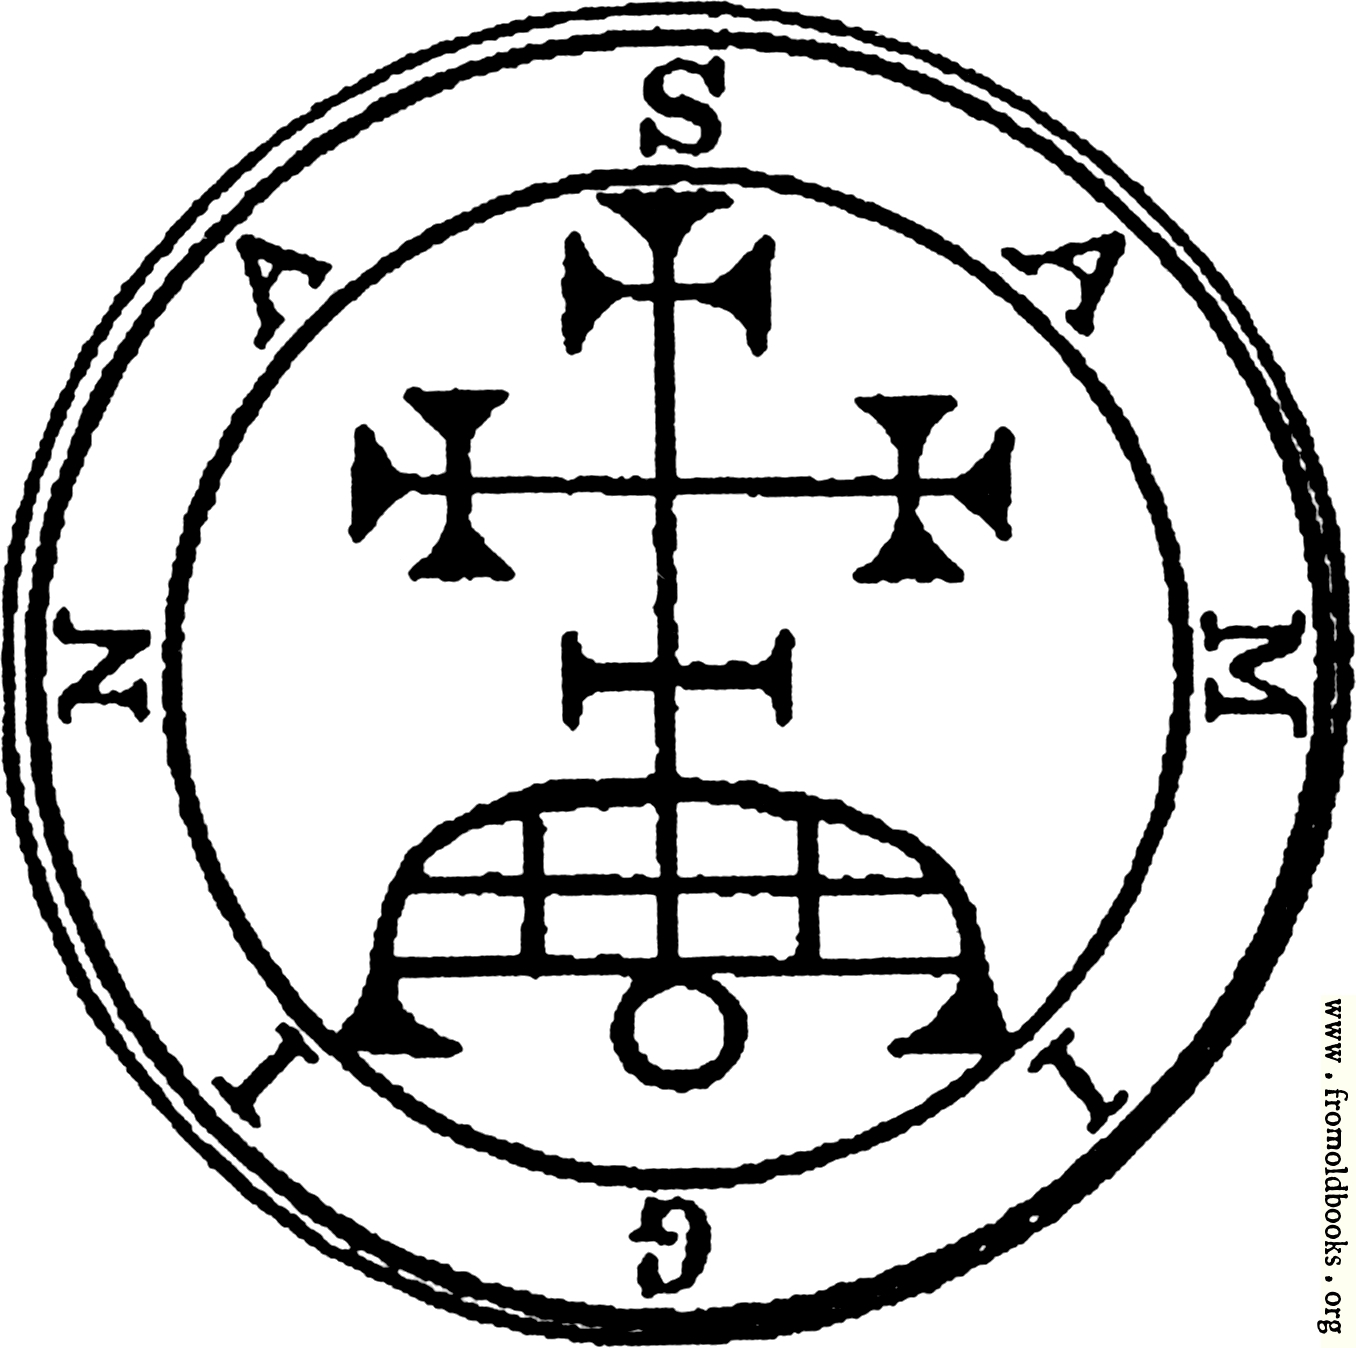 4. Seal of Gamigin.